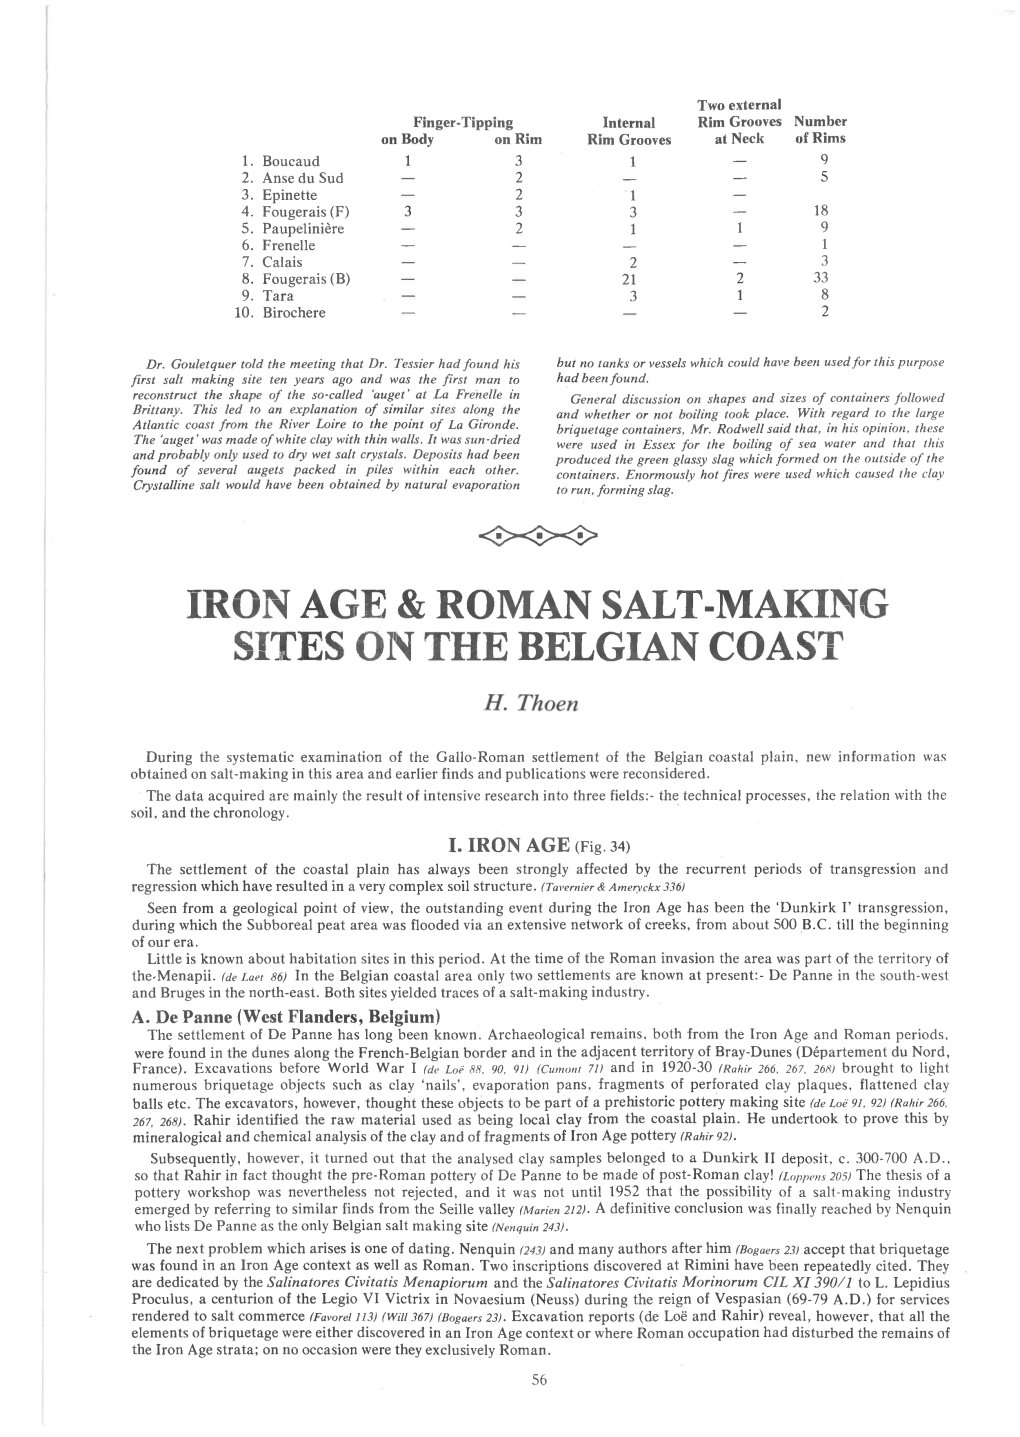 Iron Age & Roman Salt-Making Sites on the Belgian Coast